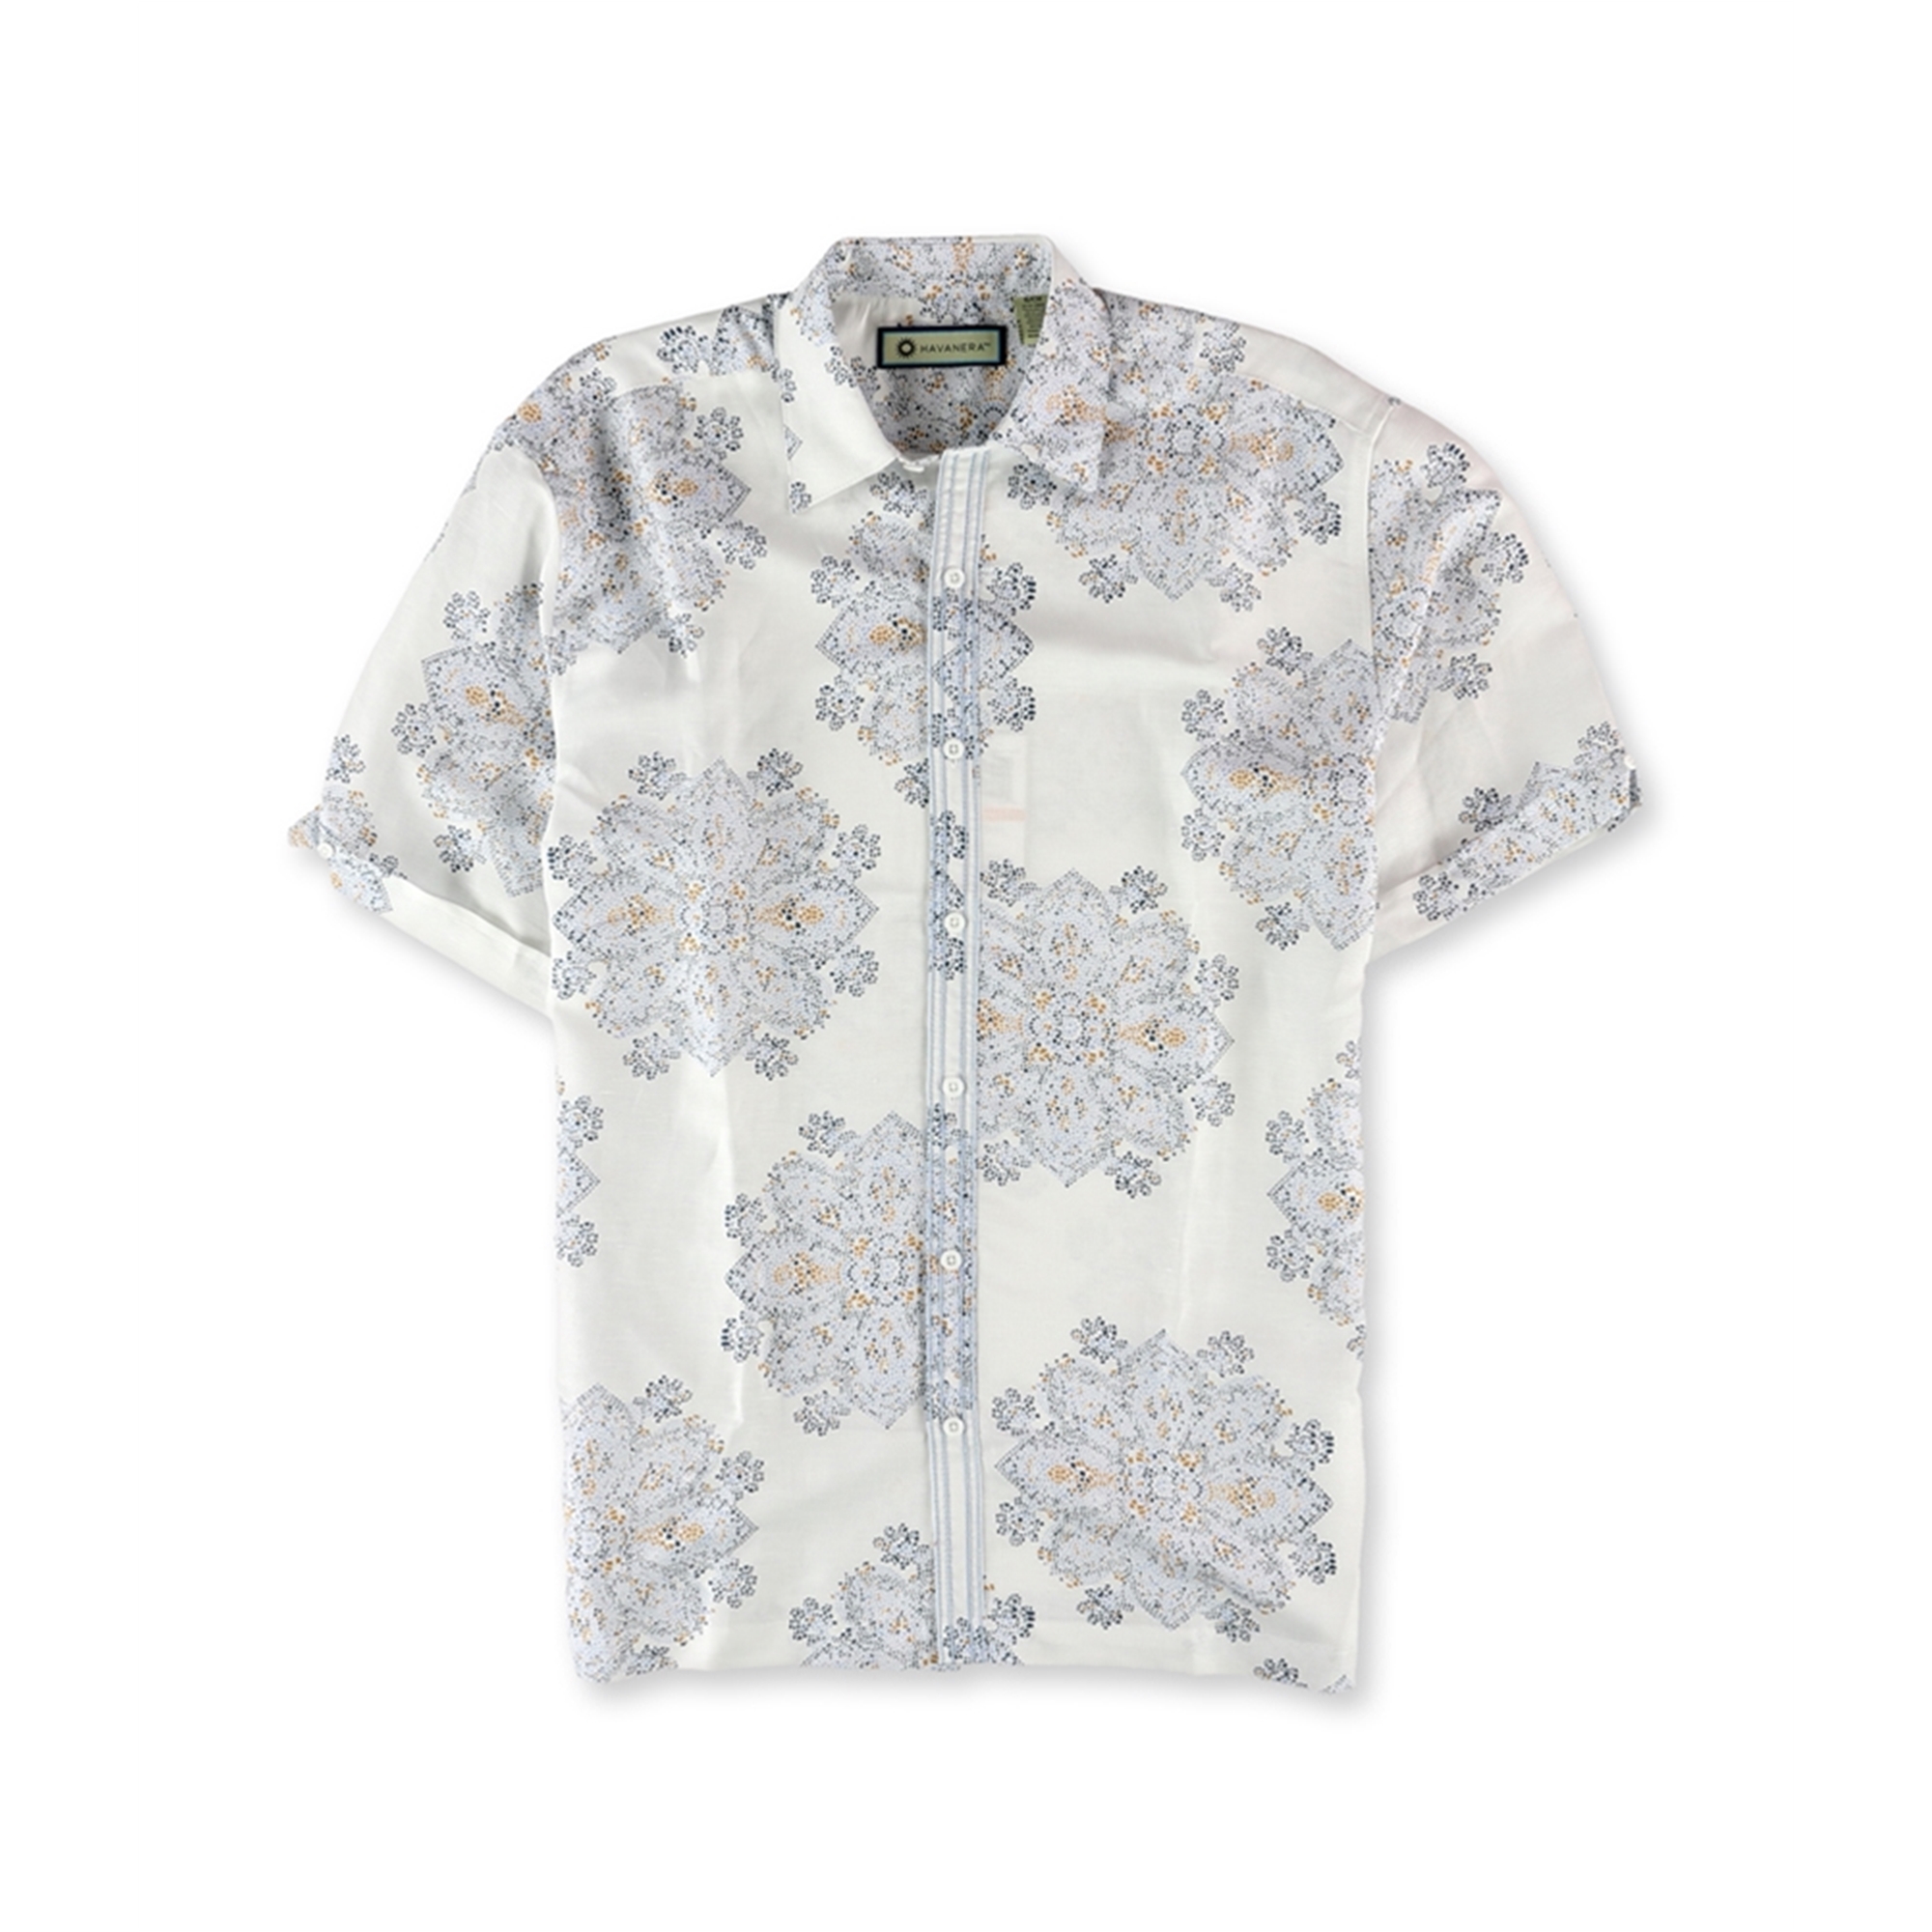 Havanera Mens Patterned Linen-Blend Button Up Shirt, White, Small ...